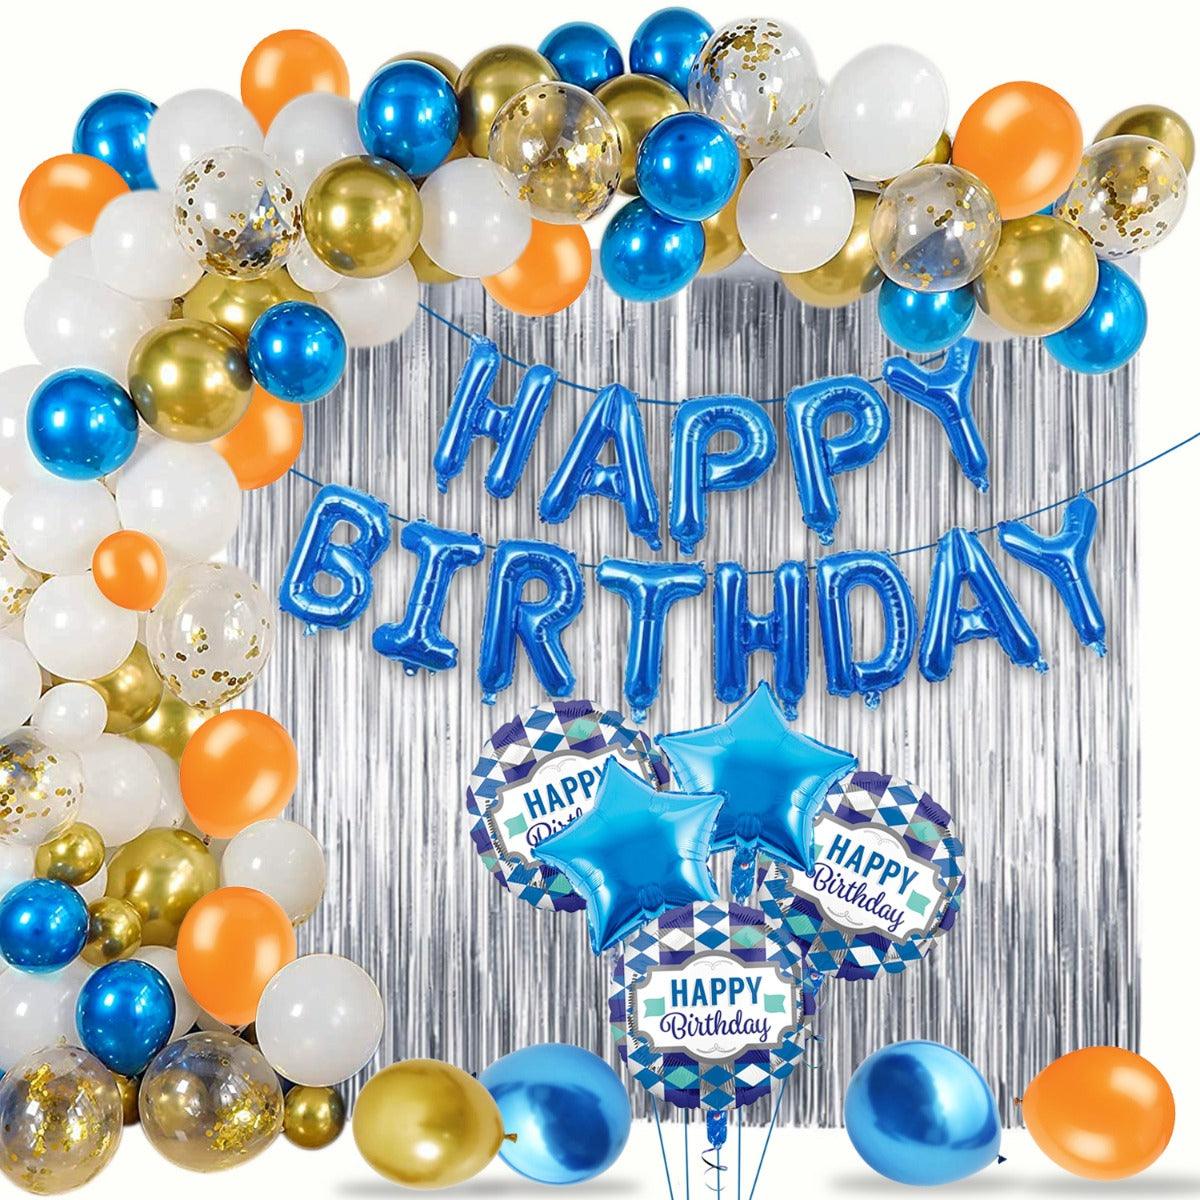 PartyCorp Happy Birthday Decoration Kit Combo 88 Pcs - Gold, Blue, White, Copper Chrome & Confetti Balloons(80 pcs), 1 pc Blue Happy Birthday Foil Balloon Banner, 2 Silver Square Foil Curtain, 2 Blue Star Foil Balloon, 3 Blue & White Happy Birthday Round